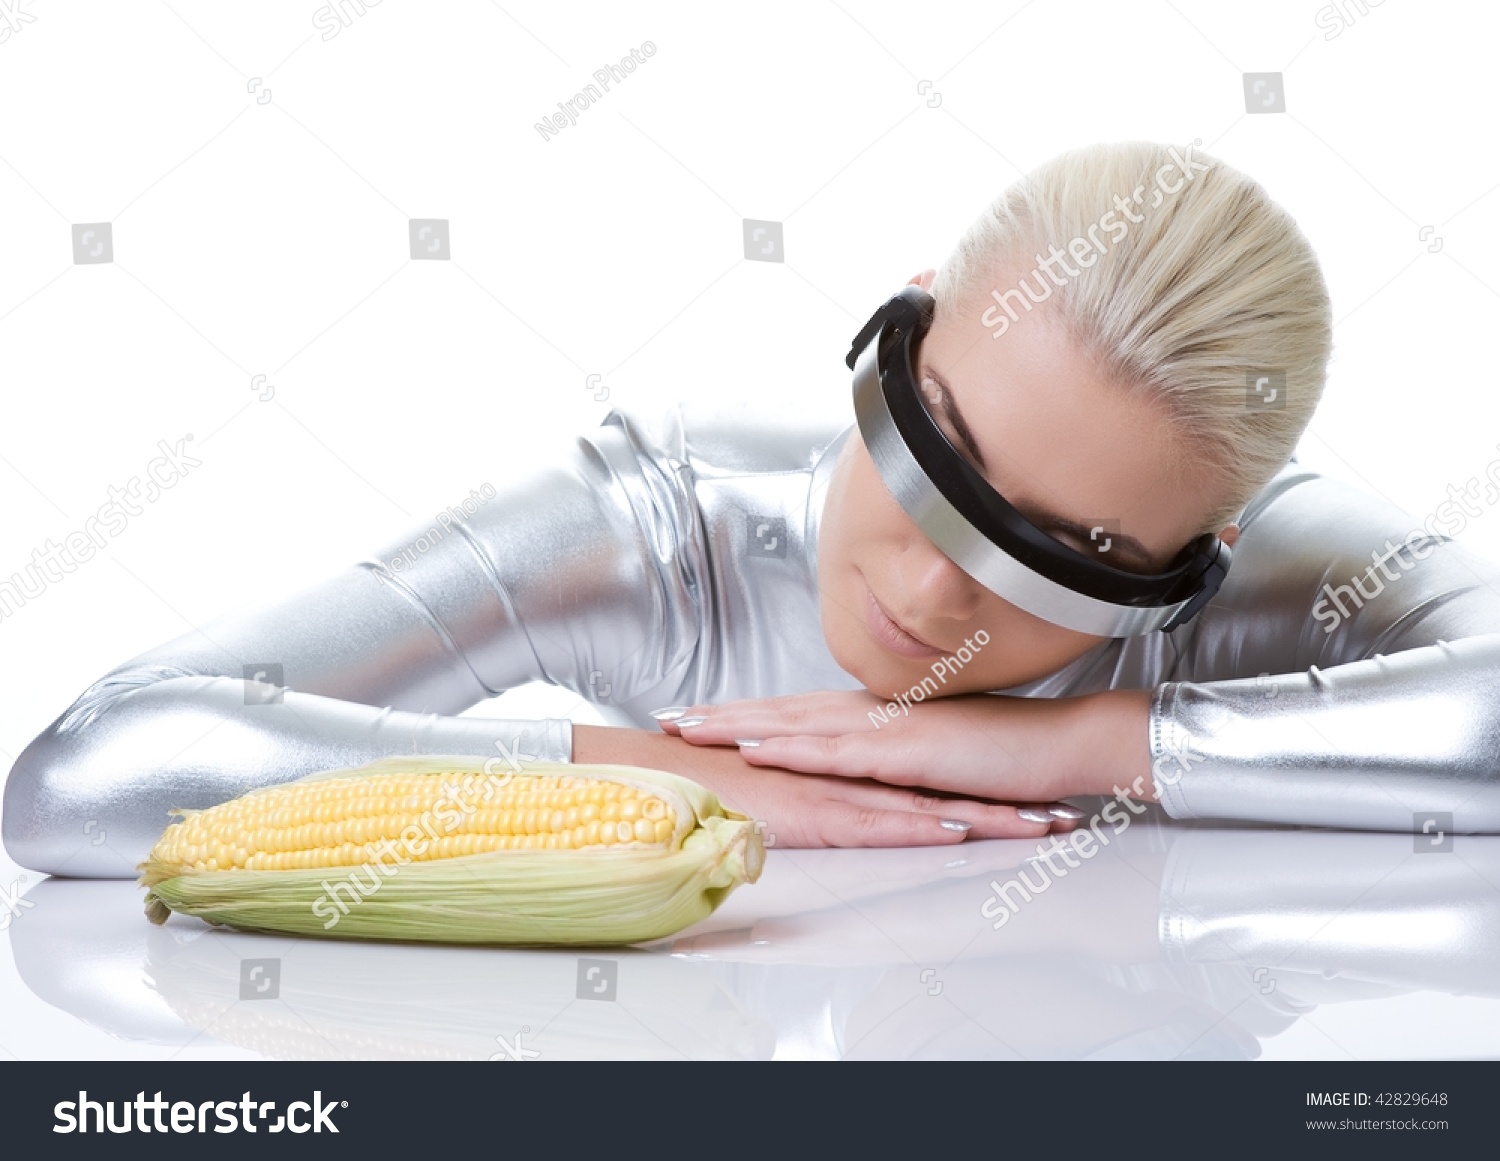 Cyber Woman Corn Stock Photo 42829648 Shutterstock.